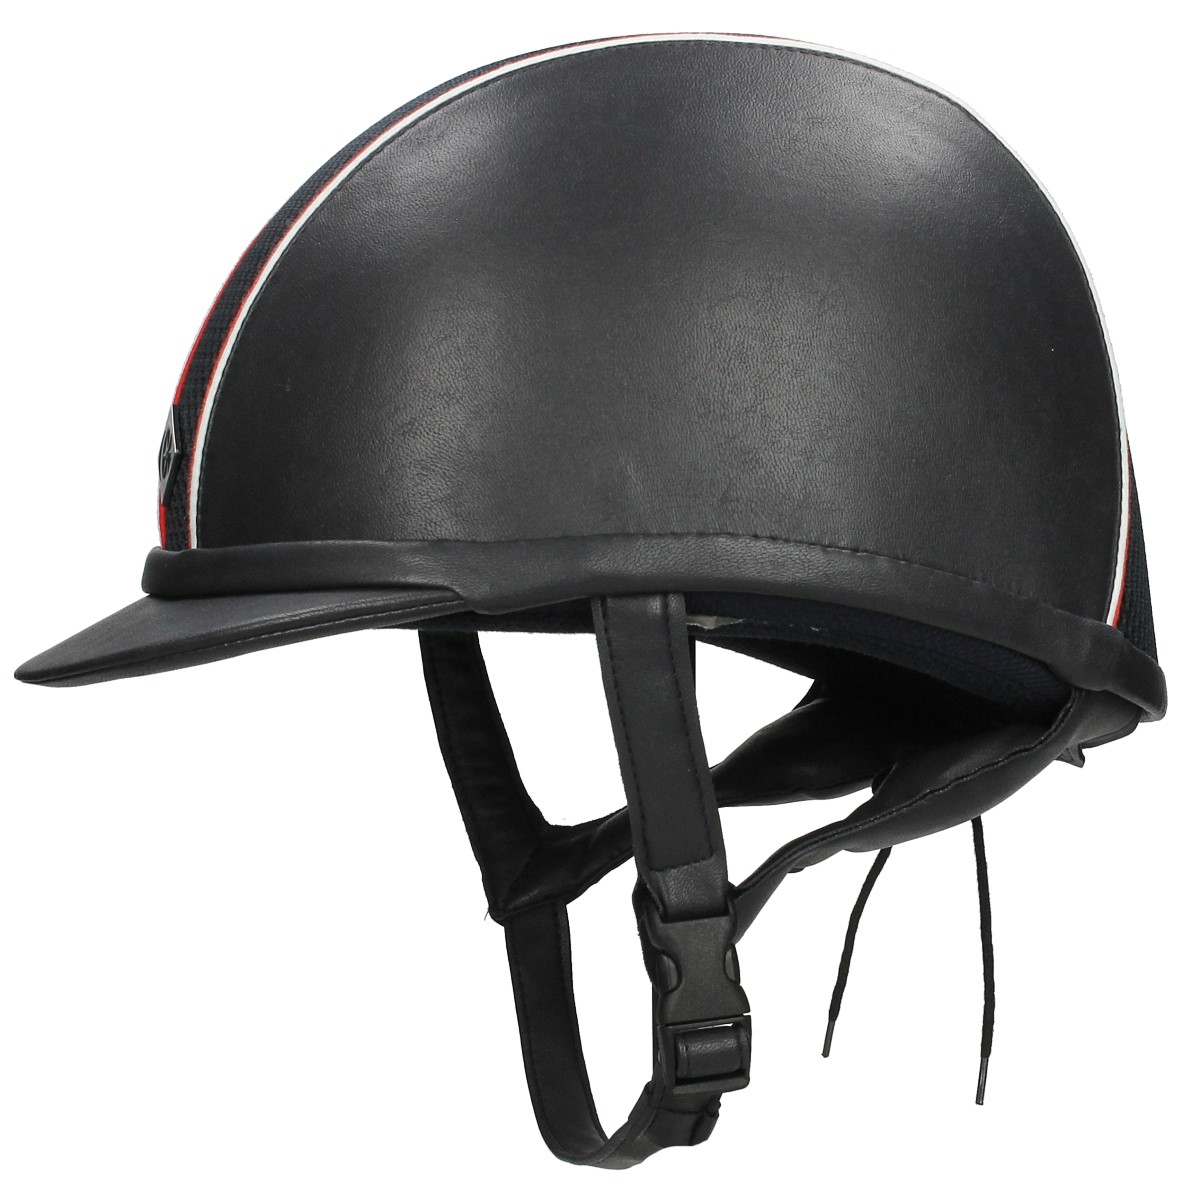 Charles Owen AYR8 Equi Suede Horse Riding Dressgae Competition Safety Helmet Hat 